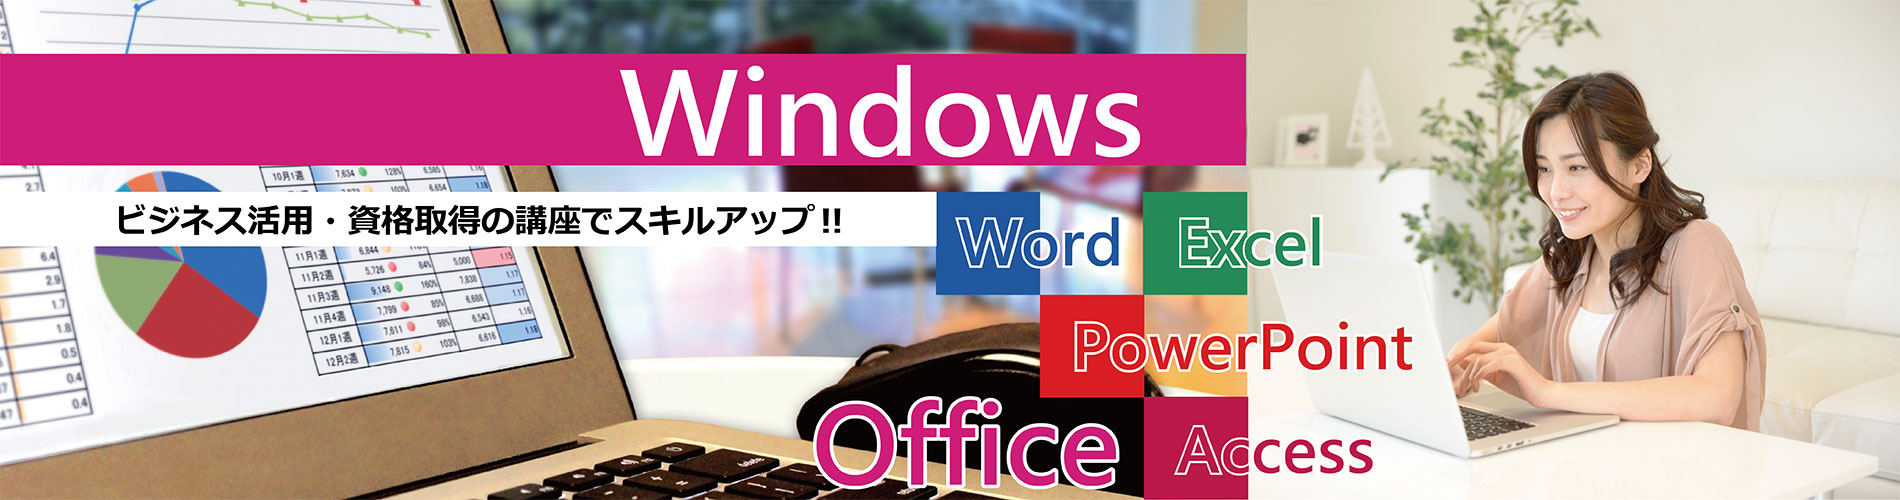 Windows/Office